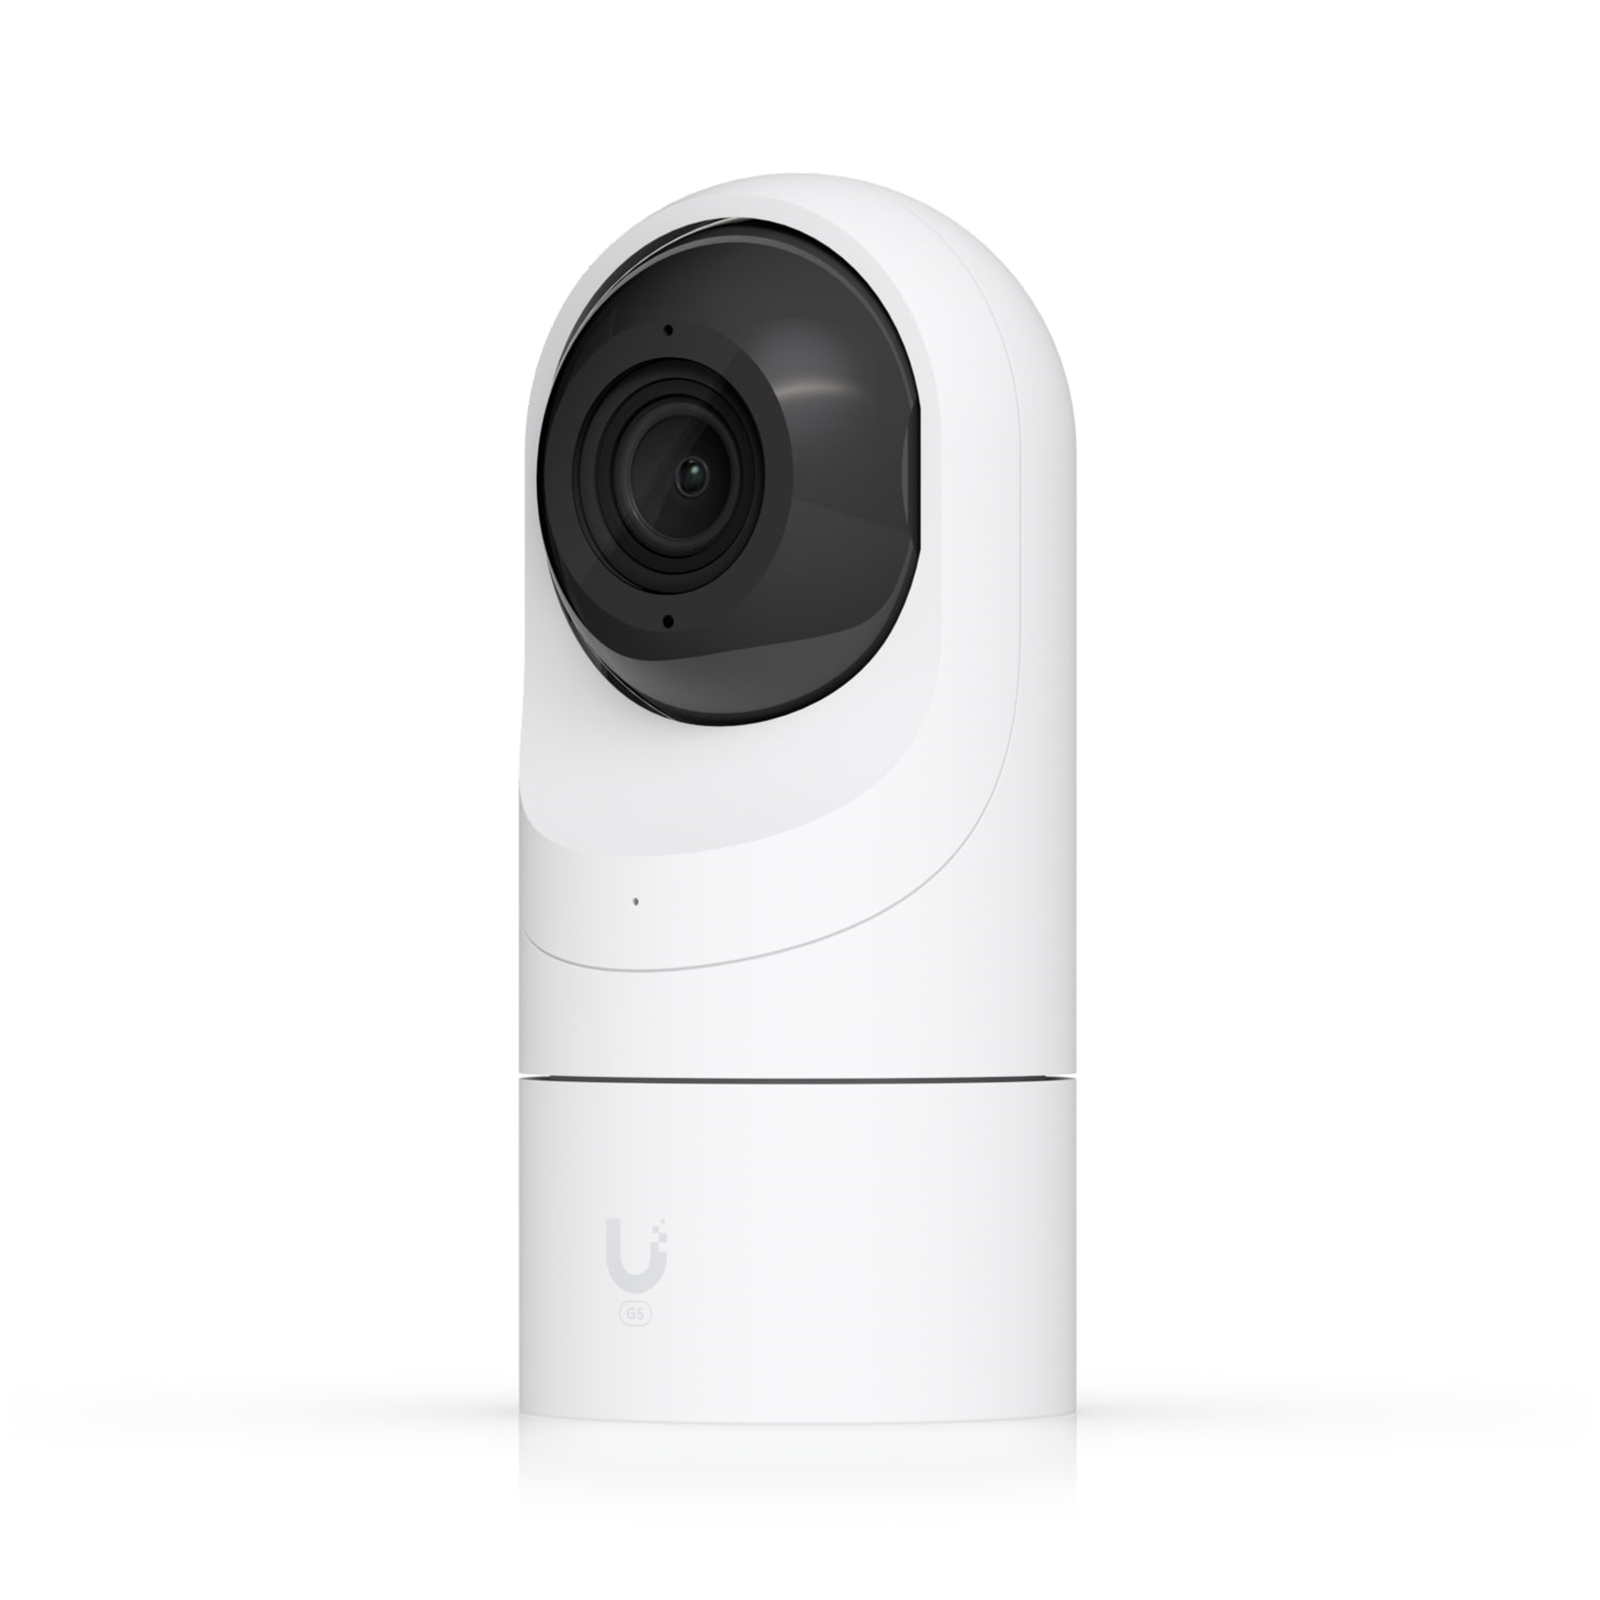 UVC G5 Flex Protect HD PoE Turret IP Camera w/ 10m Night Vision (5 MP) - UVC-G5-Flex